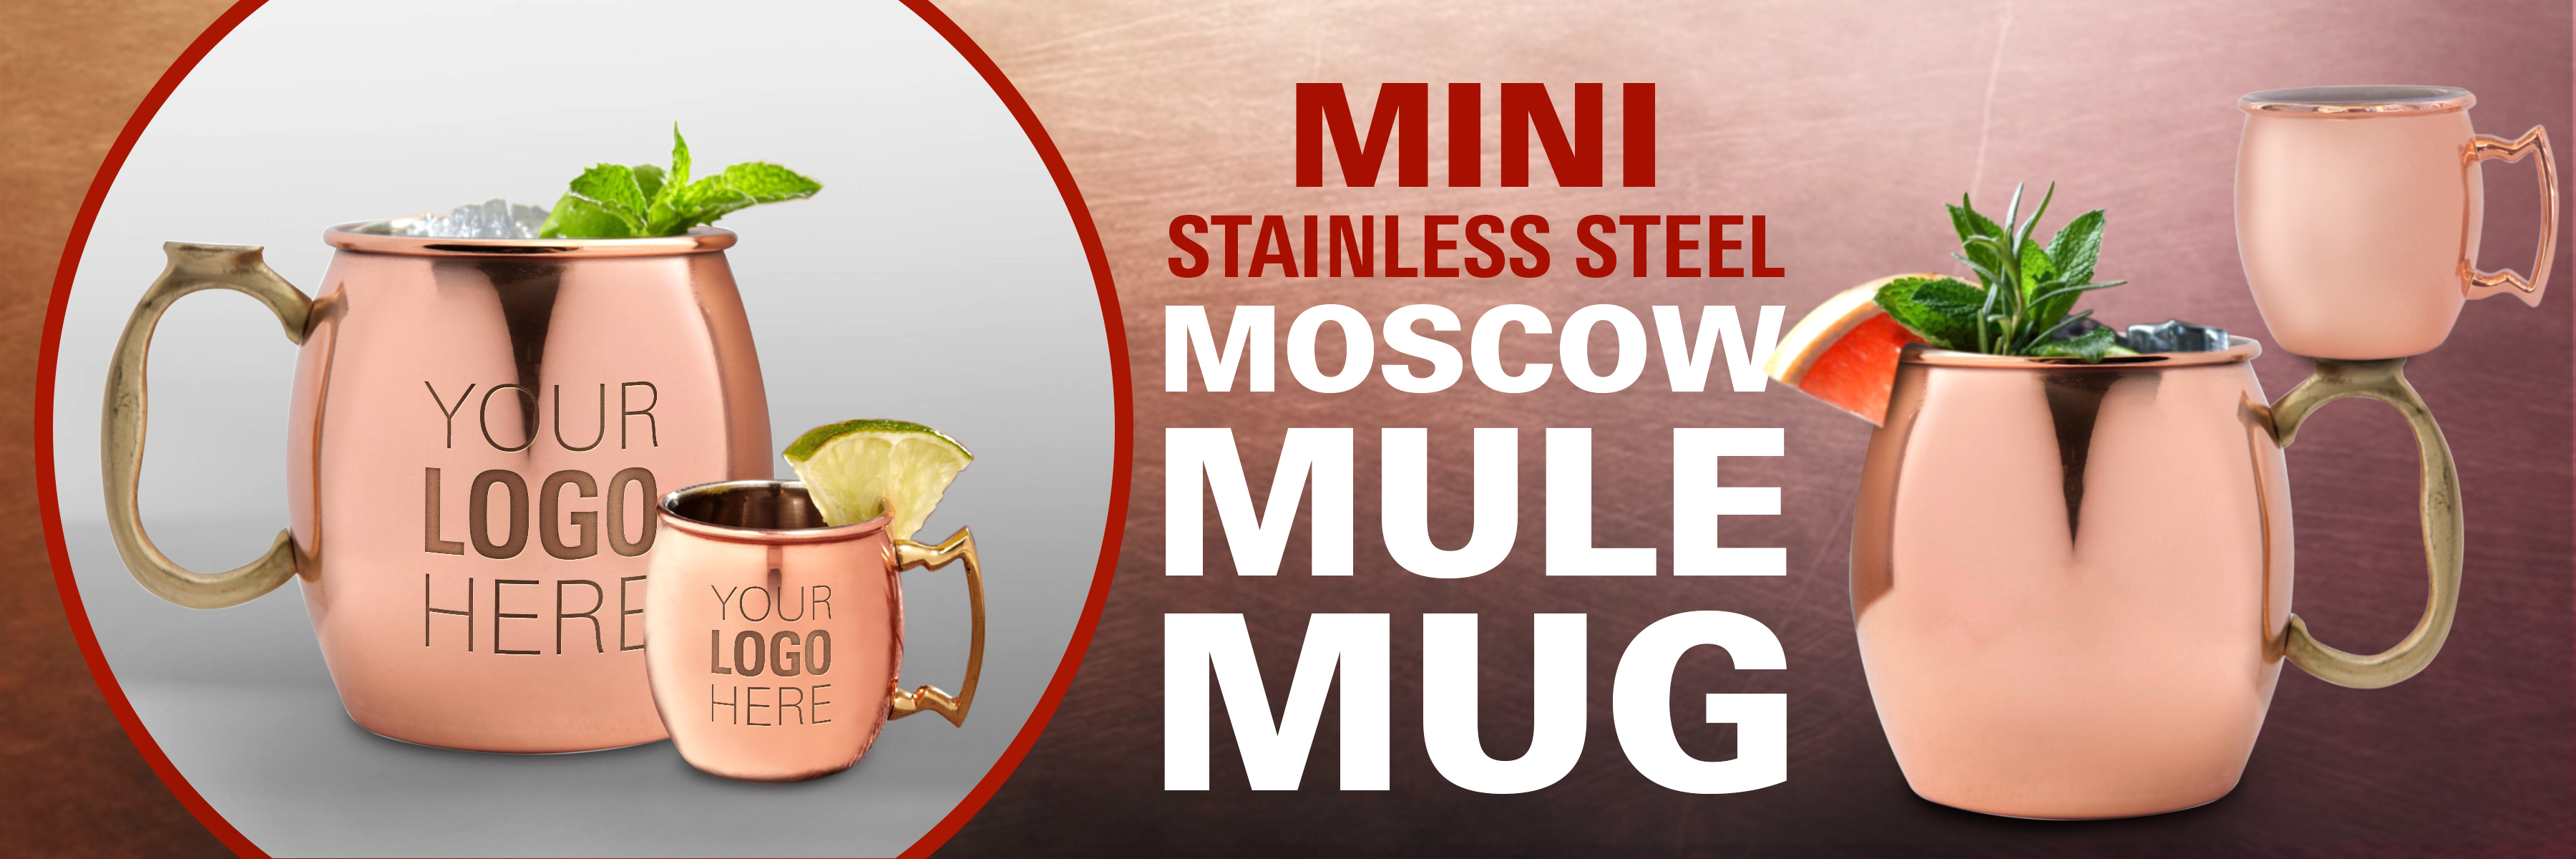 mini stainless steel moscow mule mug